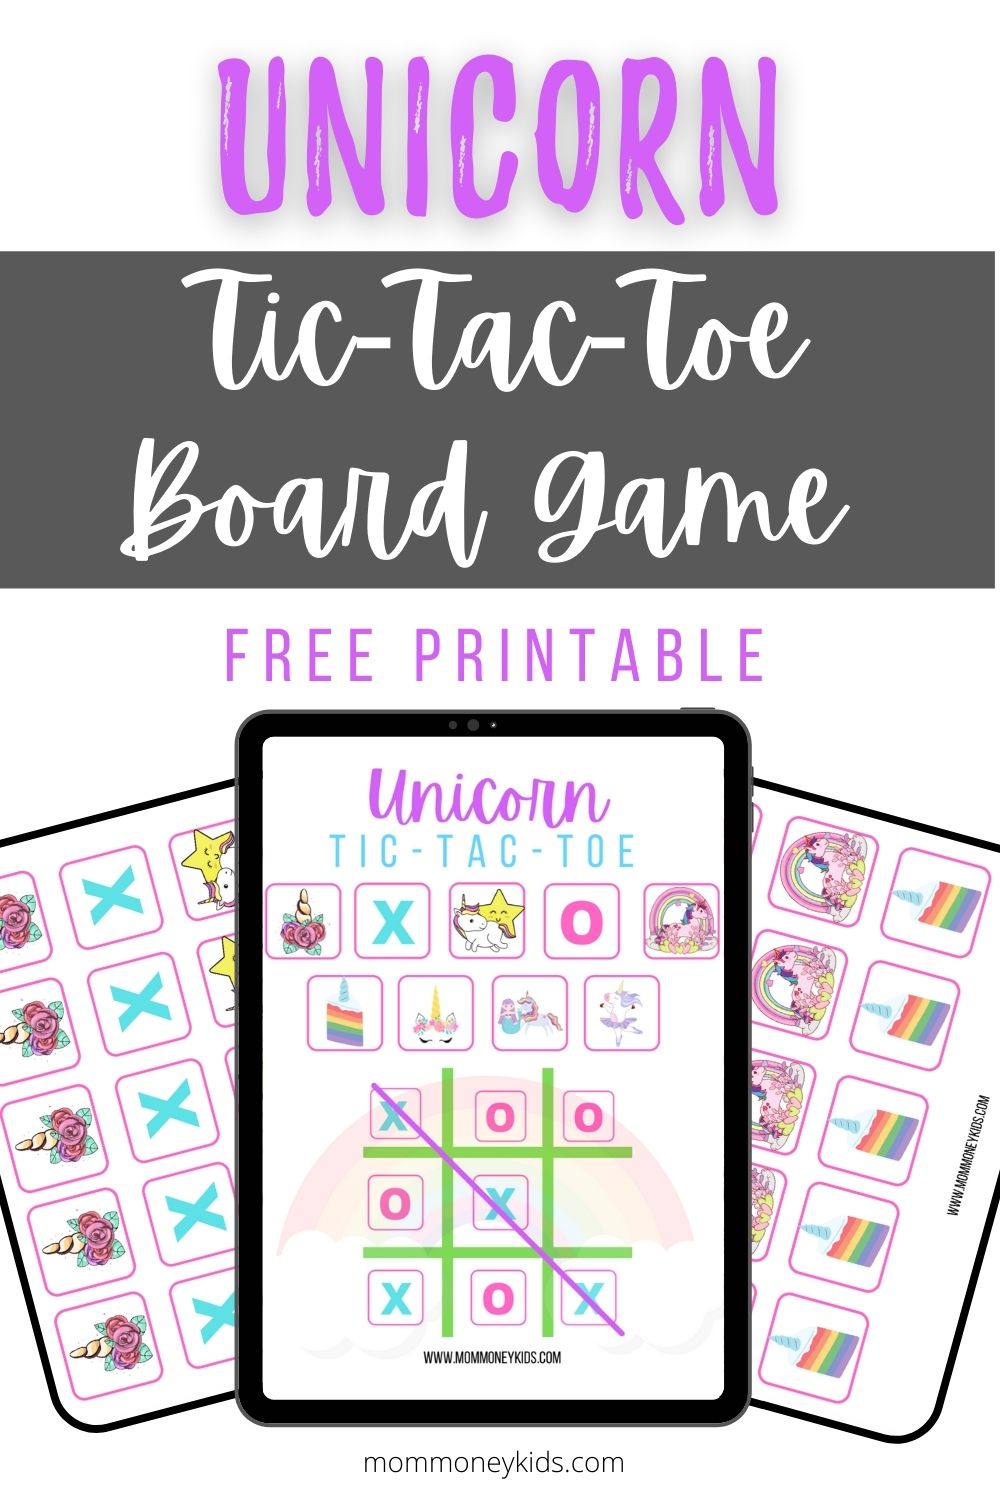 national unicorn day tic tac toe game free printable